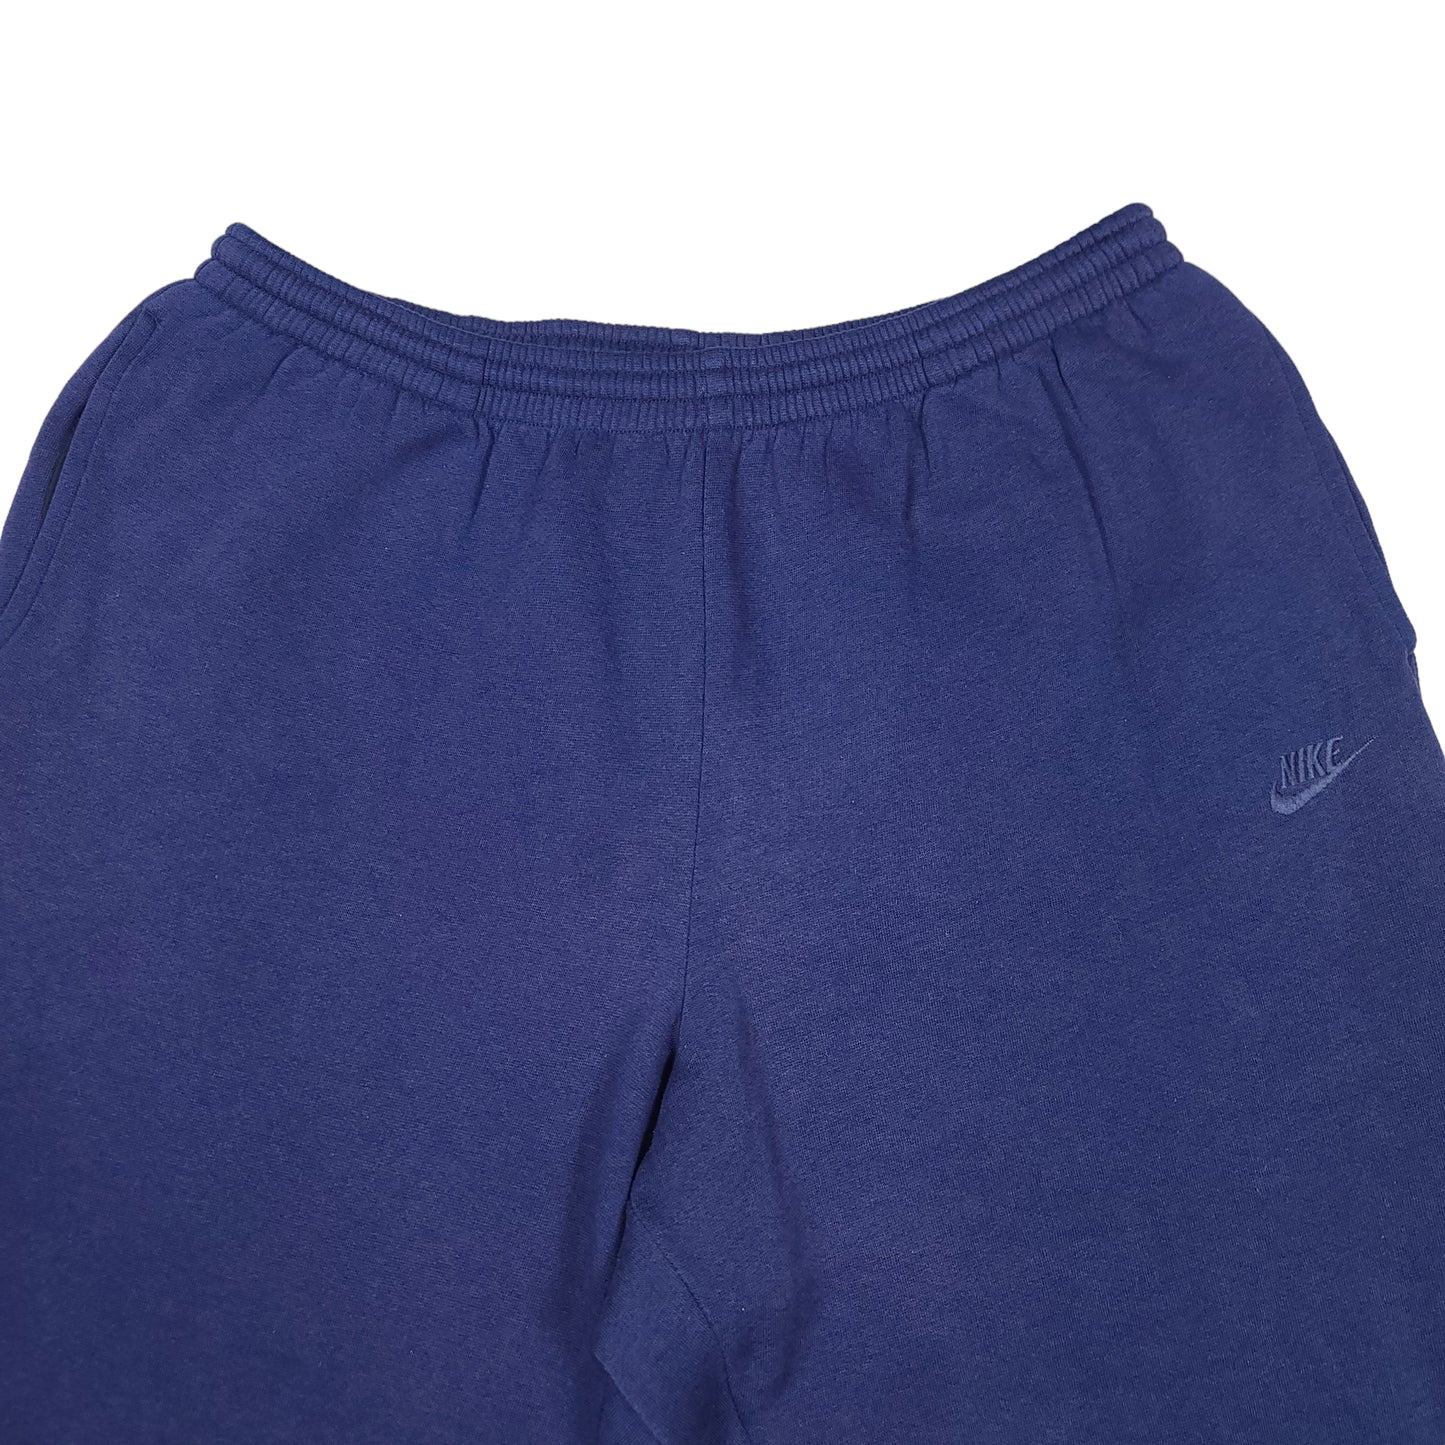 Nike Navy Blue Cotton Sweatpants